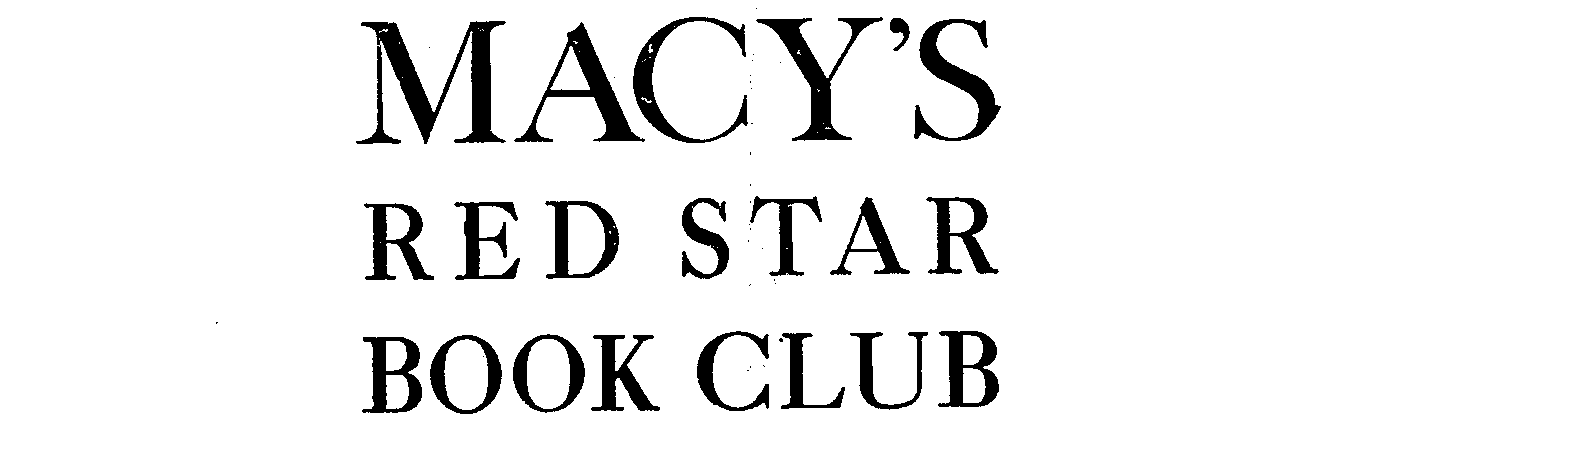  MACY'S RED STAR BOOK CLUB